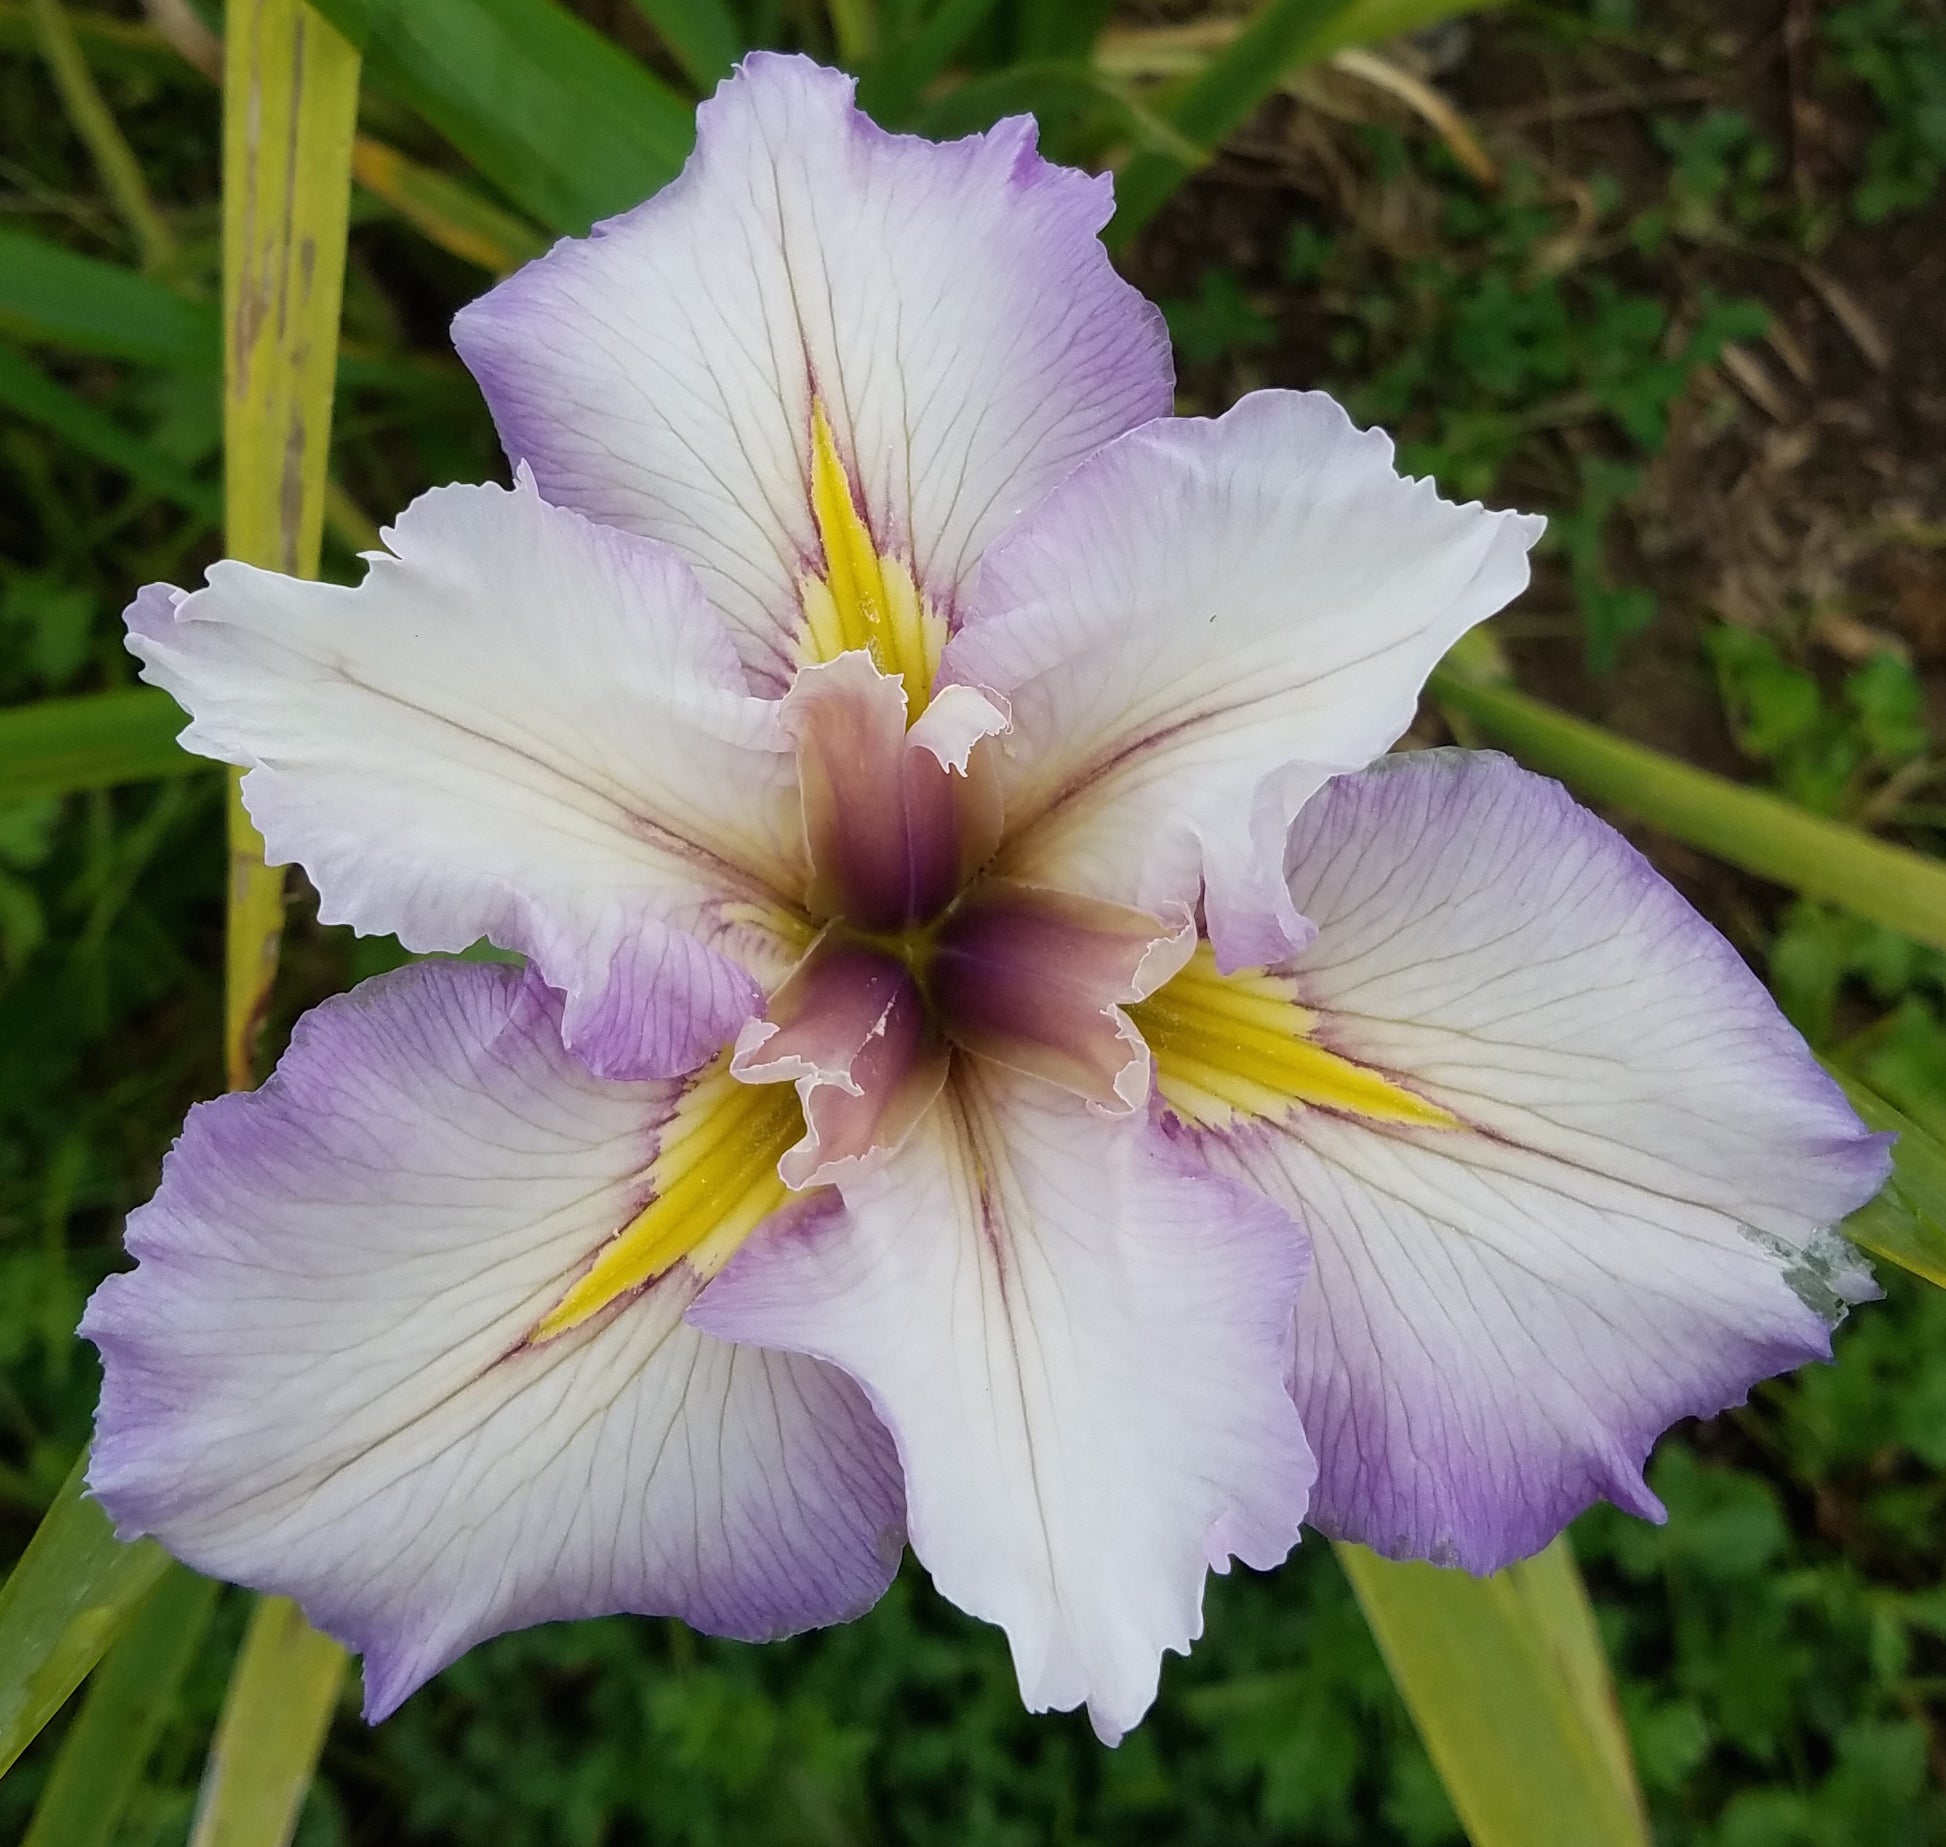 Image of an aged bloom of Louisiana Iris Ephemeral Edge. Image credit: Brian Shamblin